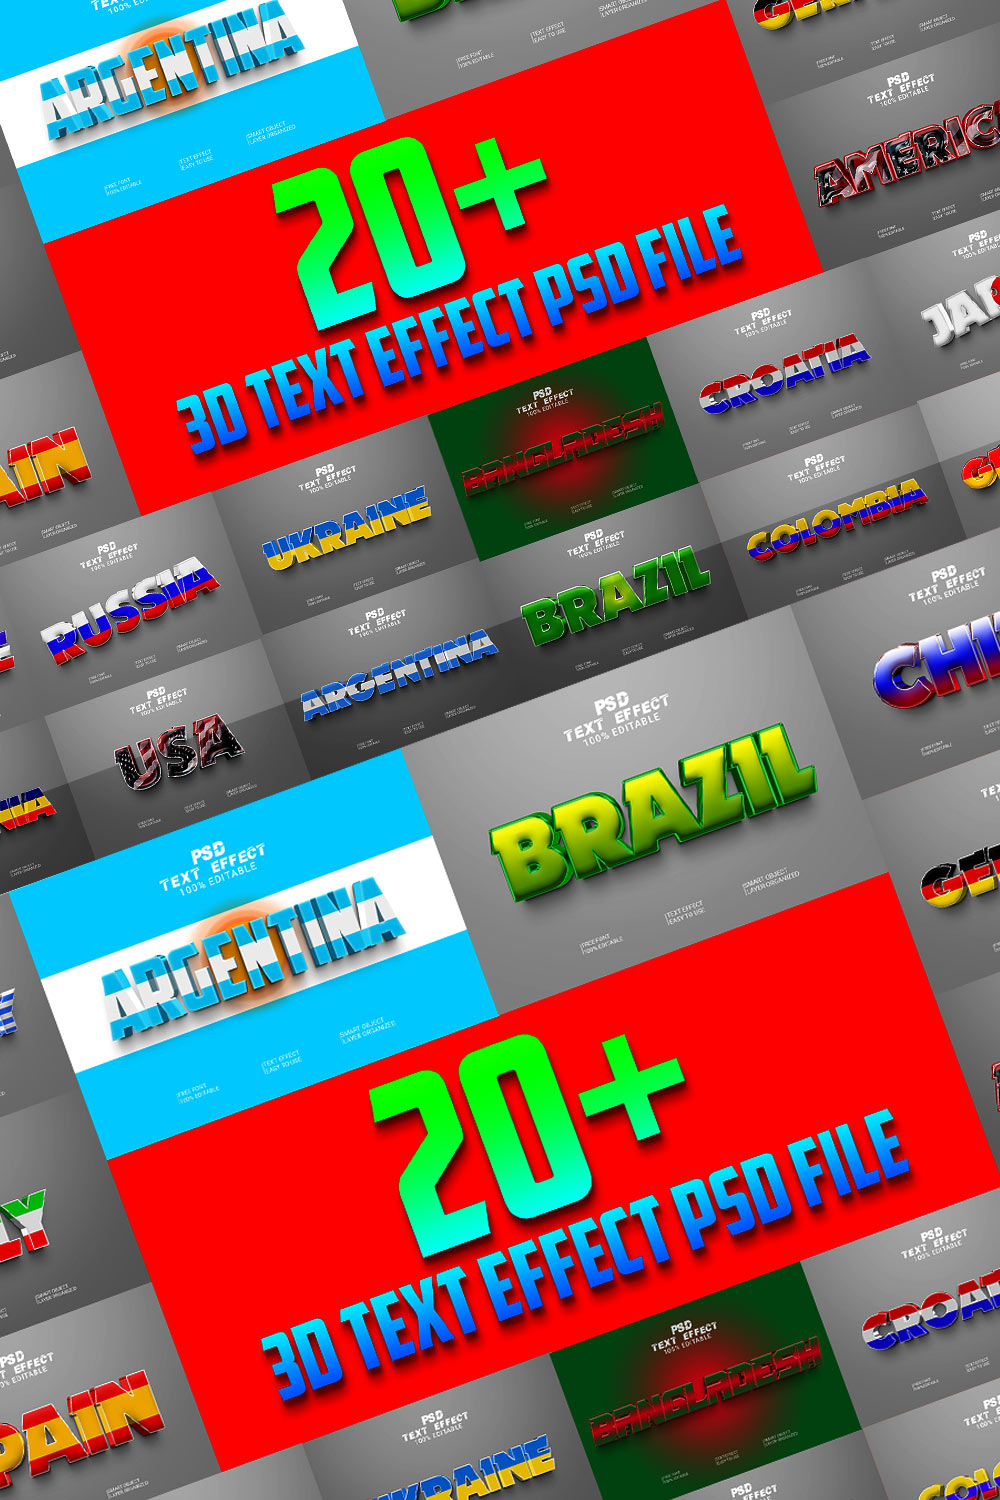 World Cup Football 3d Effect Style Design pinterest image.